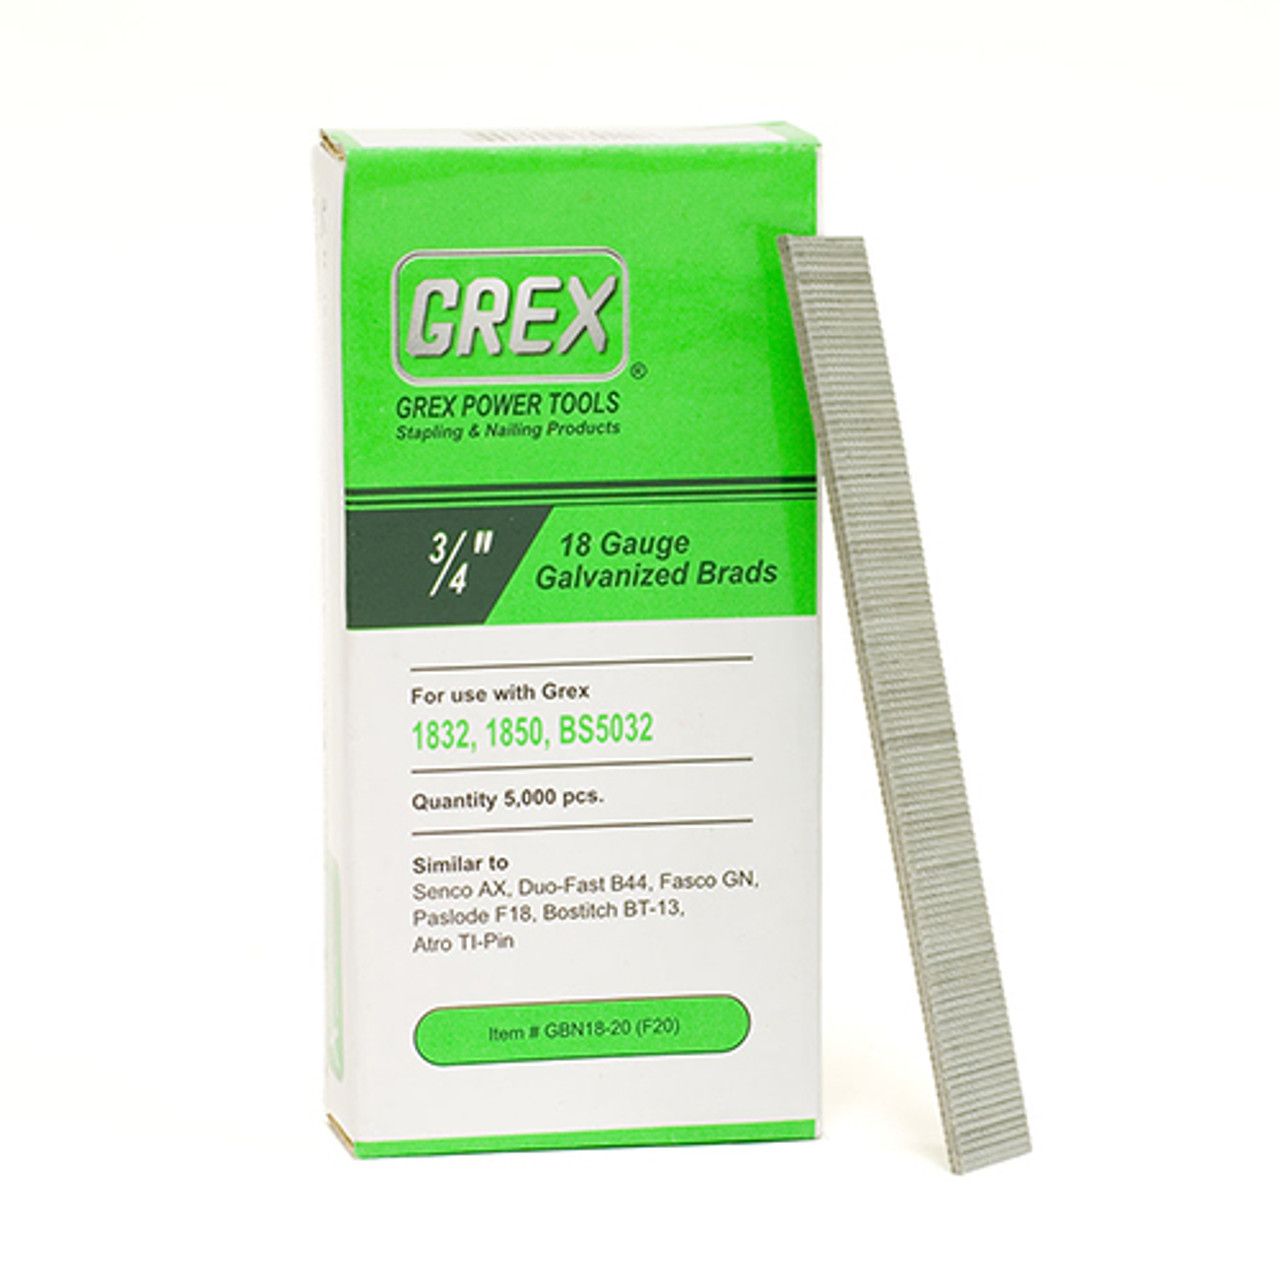 Grex 18 Gauge, 3/4" Long, Galvanized Brad Nails, Box of 5,000